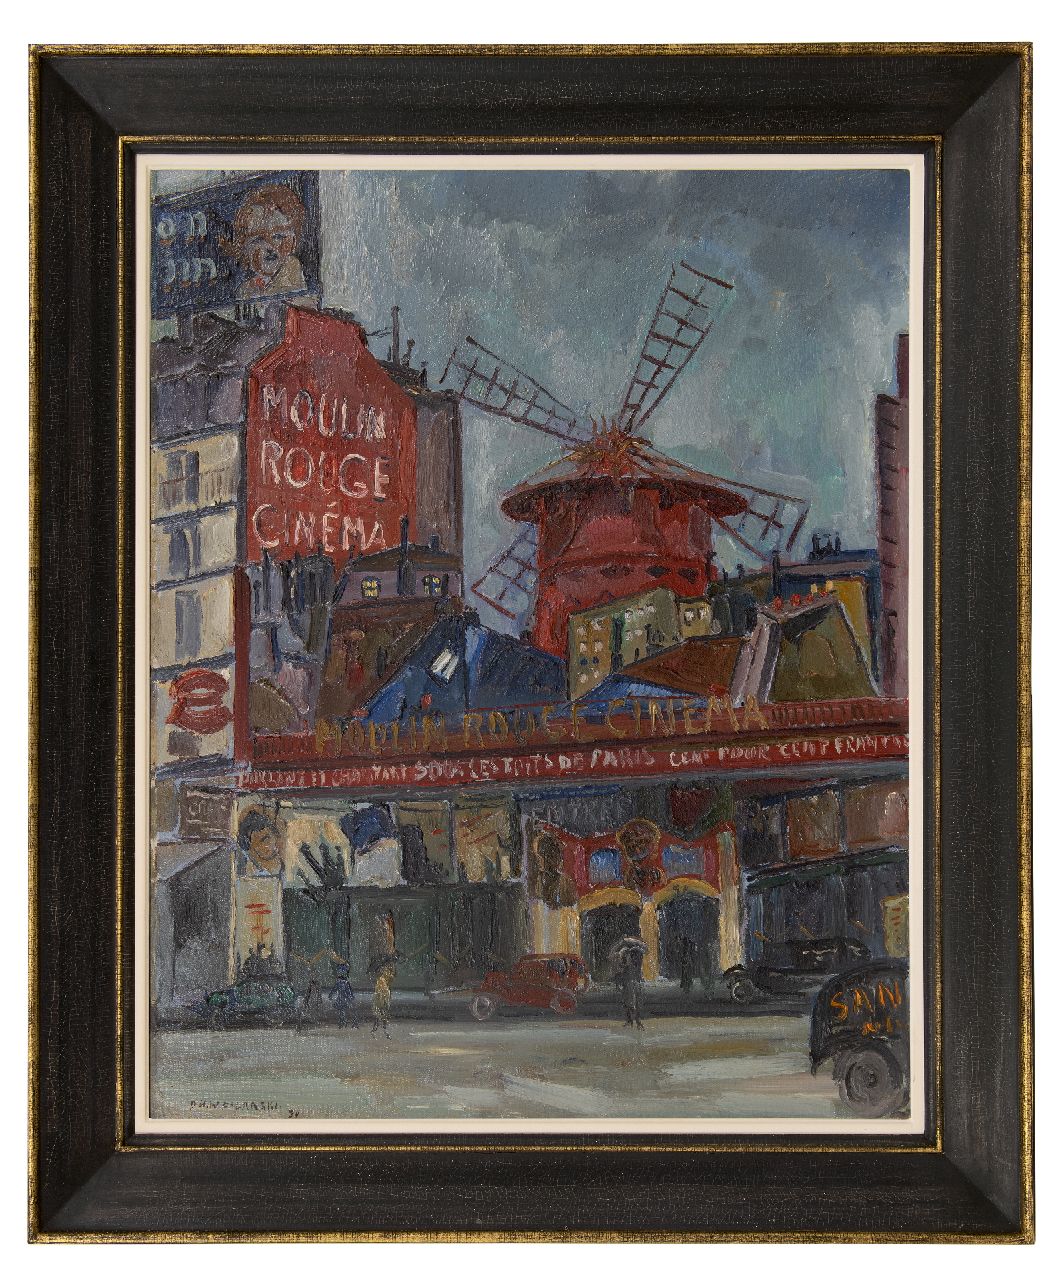 Filarski D.H.W.  | 'Dirk' Herman Willem Filarski | Paintings offered for sale | Moulin Rouge, oil on canvas 81.5 x 65.5 cm, signed l.l. and dated '30